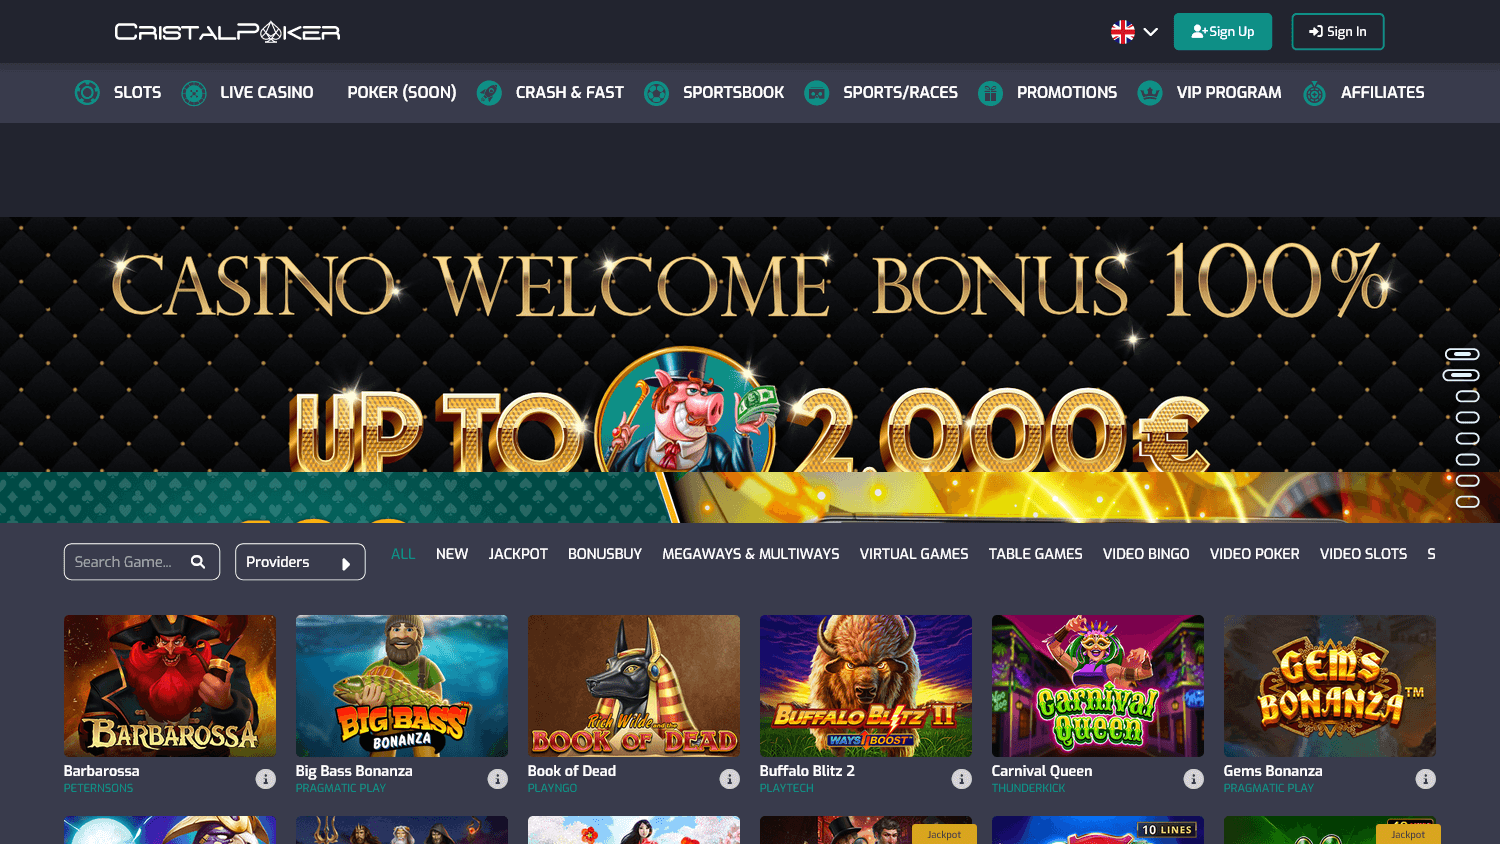 cristal_poker_casino_homepage_desktop